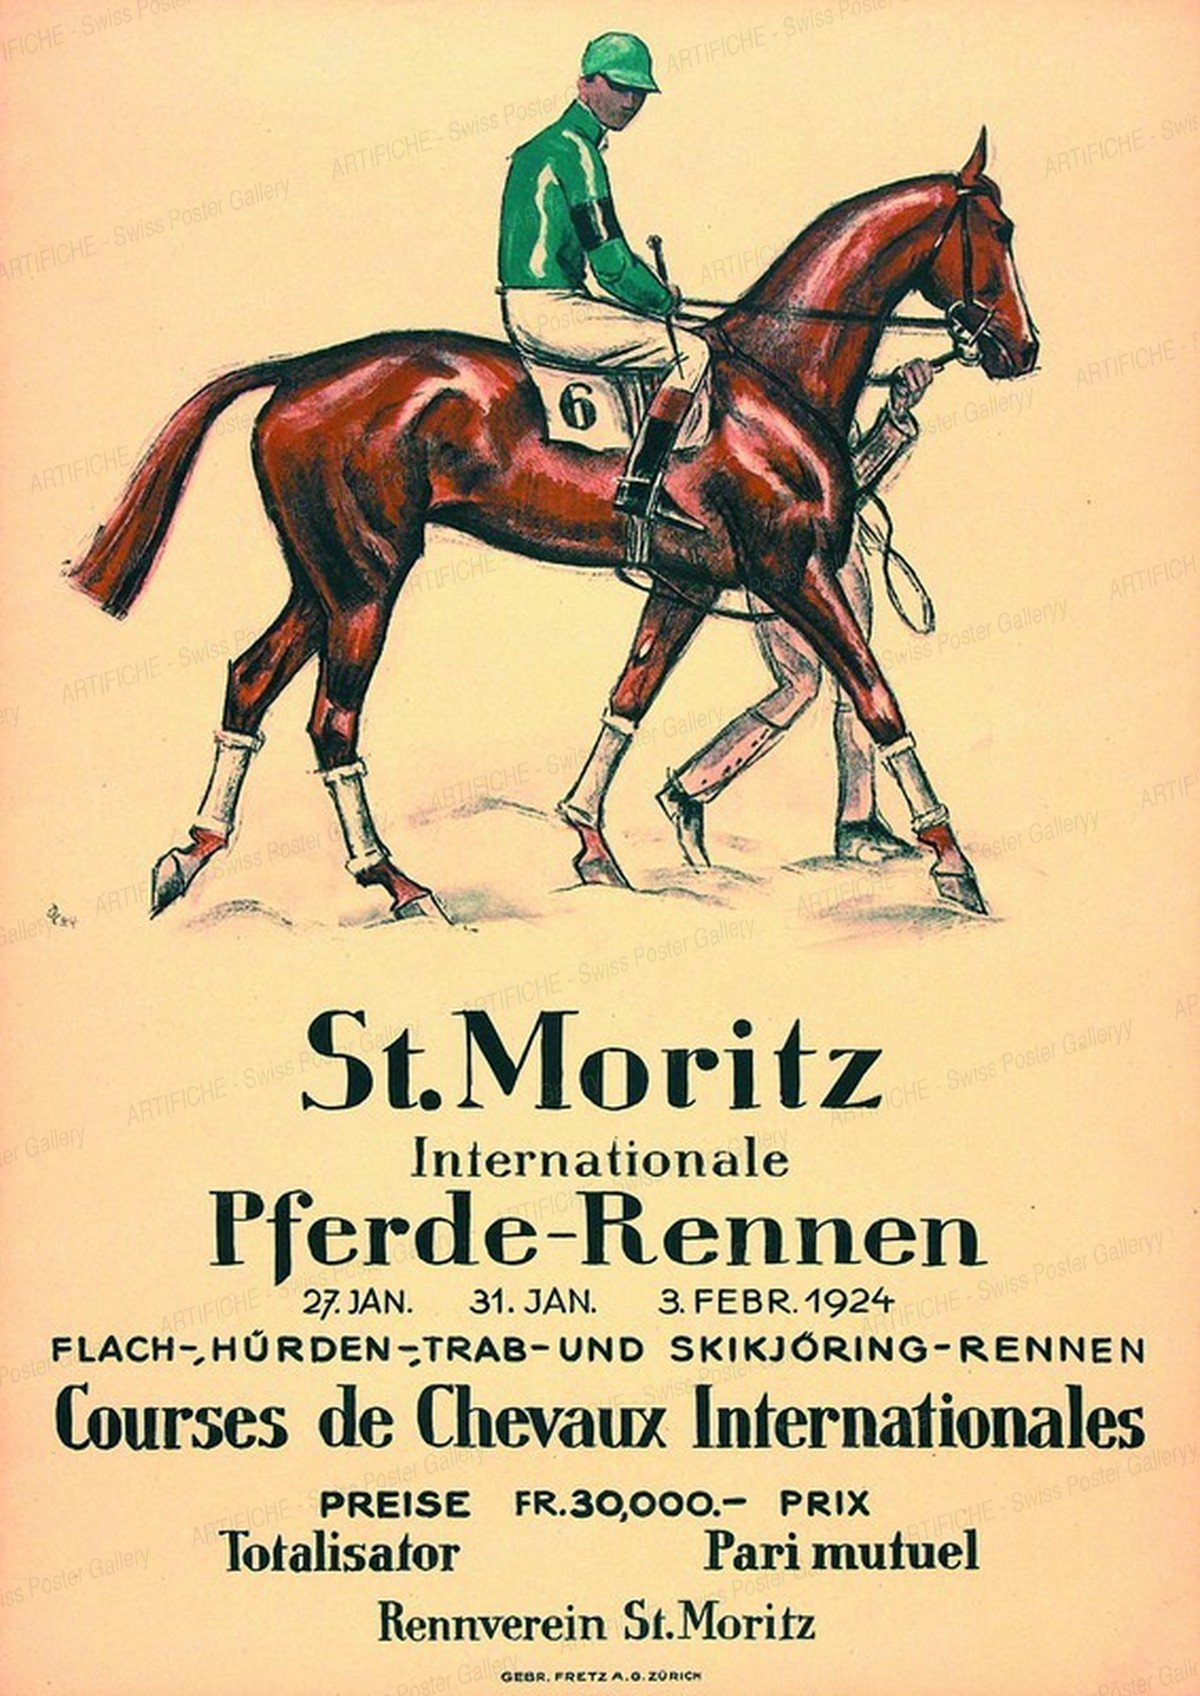 St. Moritz Horse Racing, Hugo Laubi